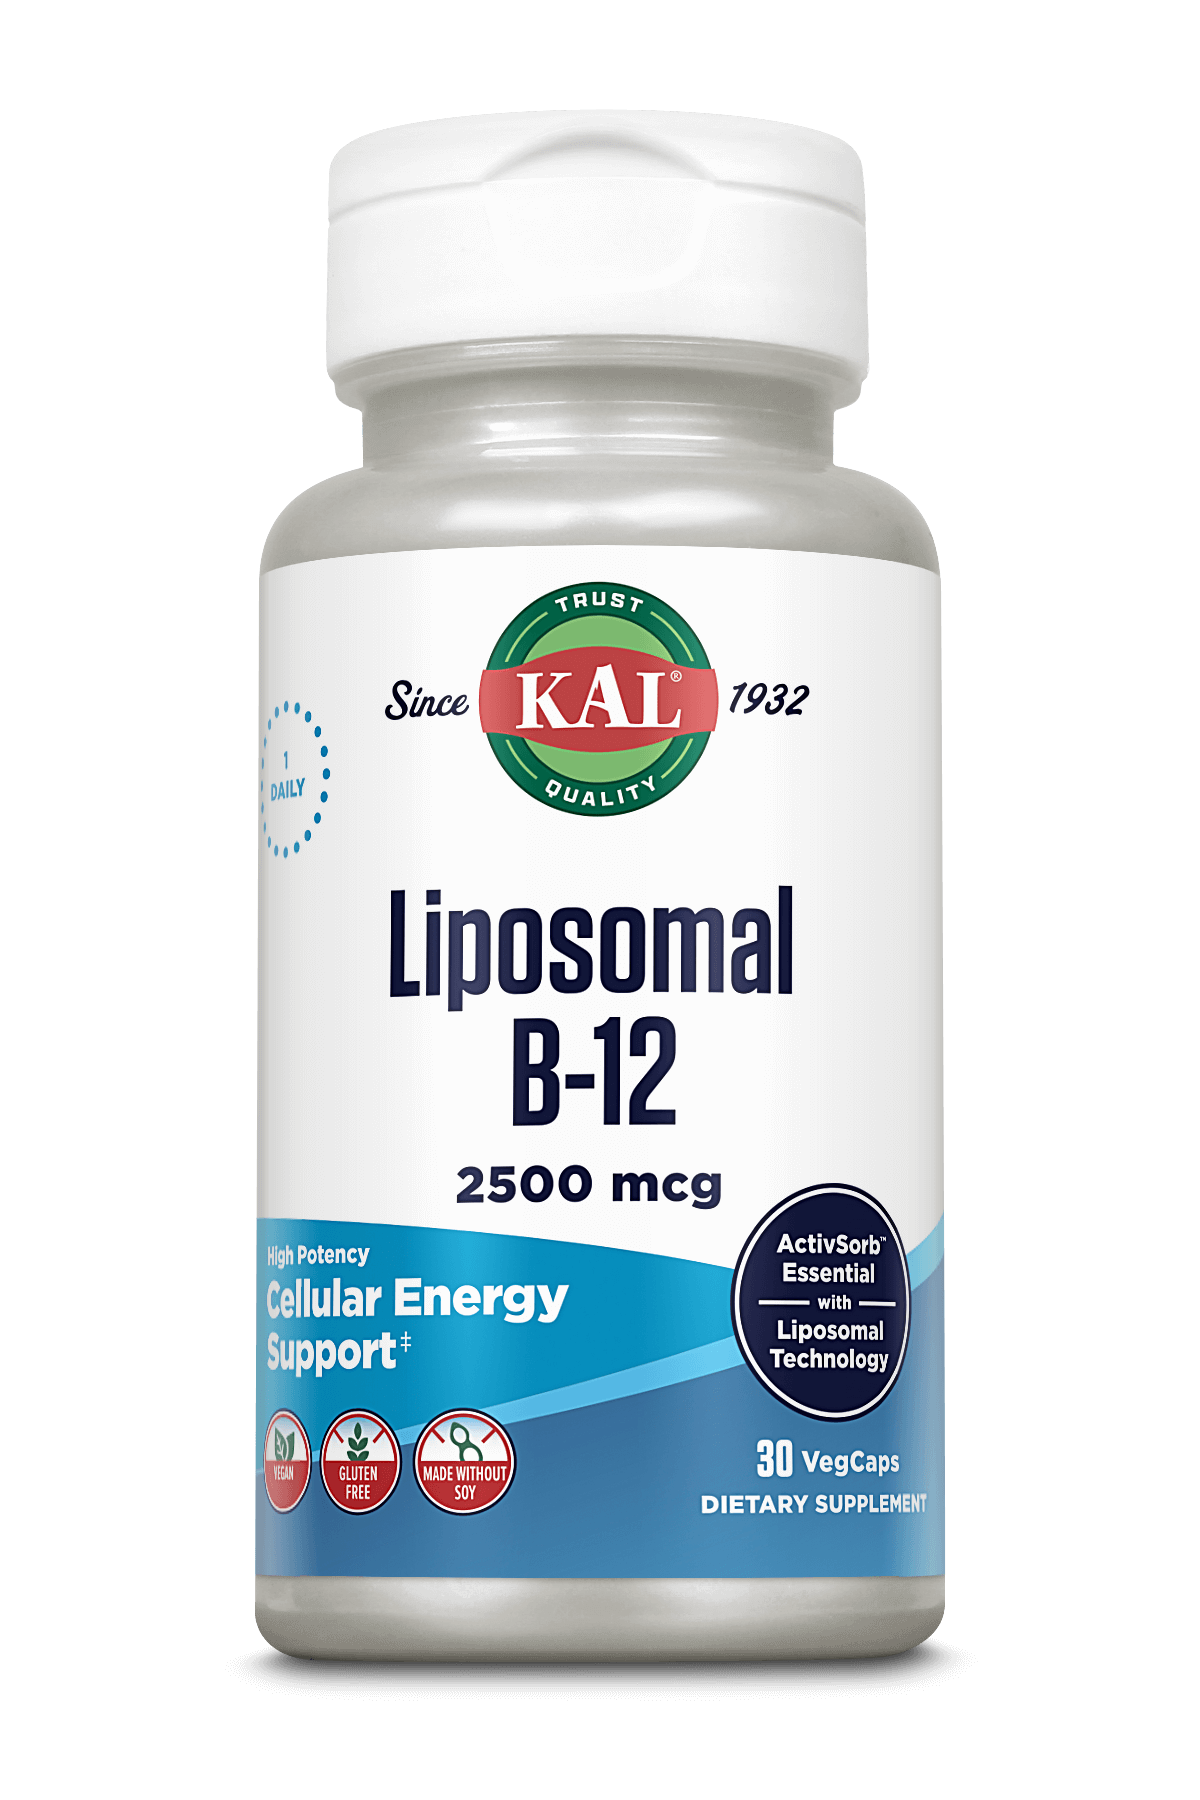 Liposomal B12